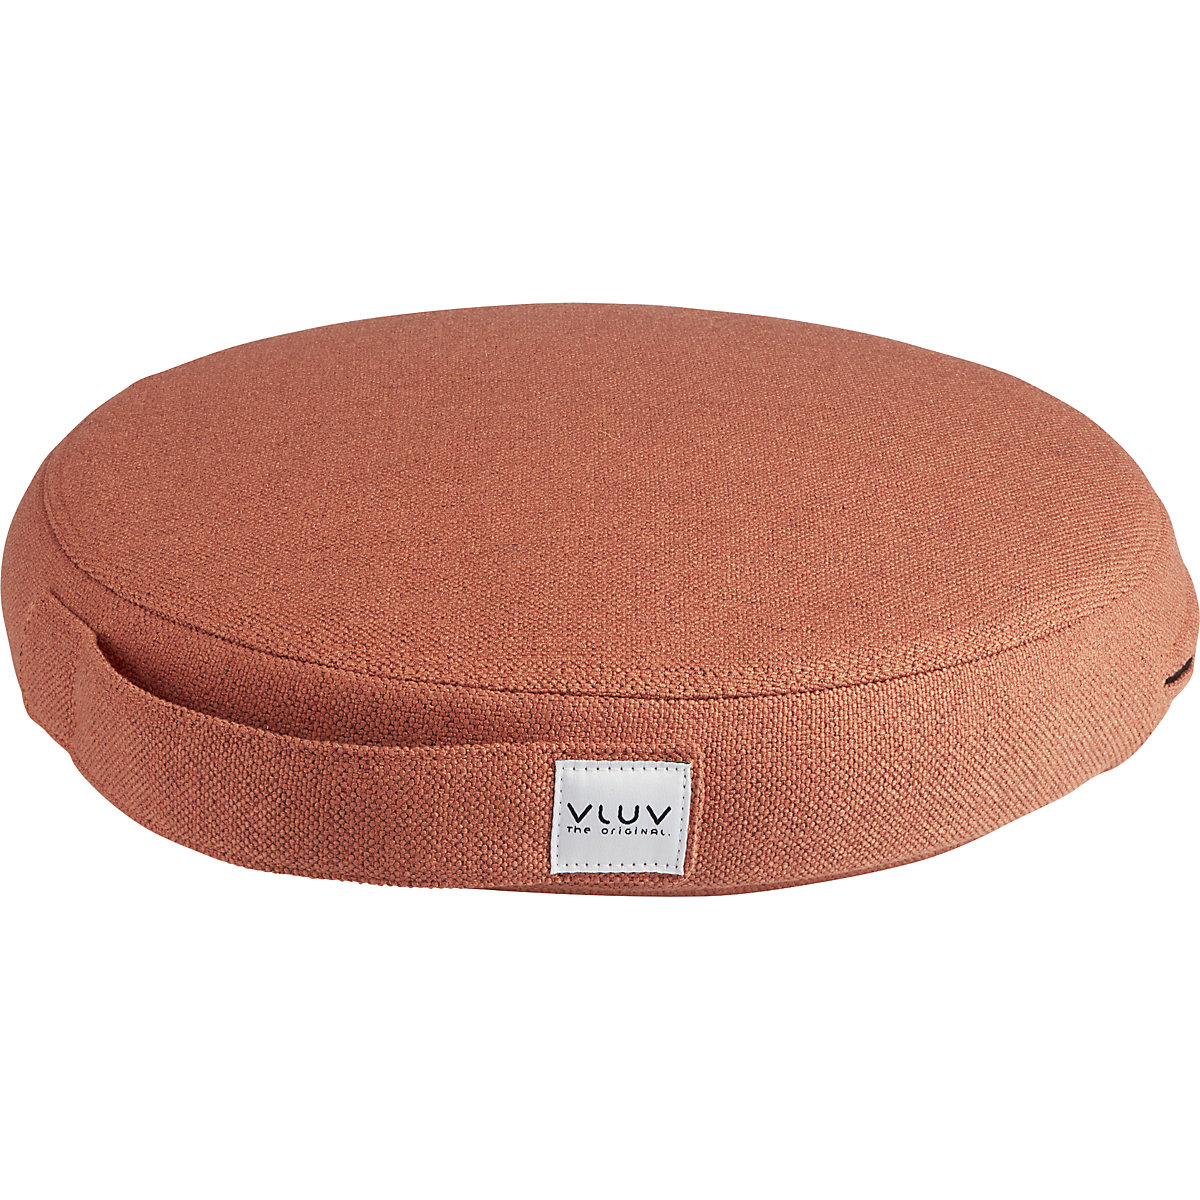 PIL&PED SOVA balance cushion – VLUV, with fabric cover, Ø 360 mm, salmon orange